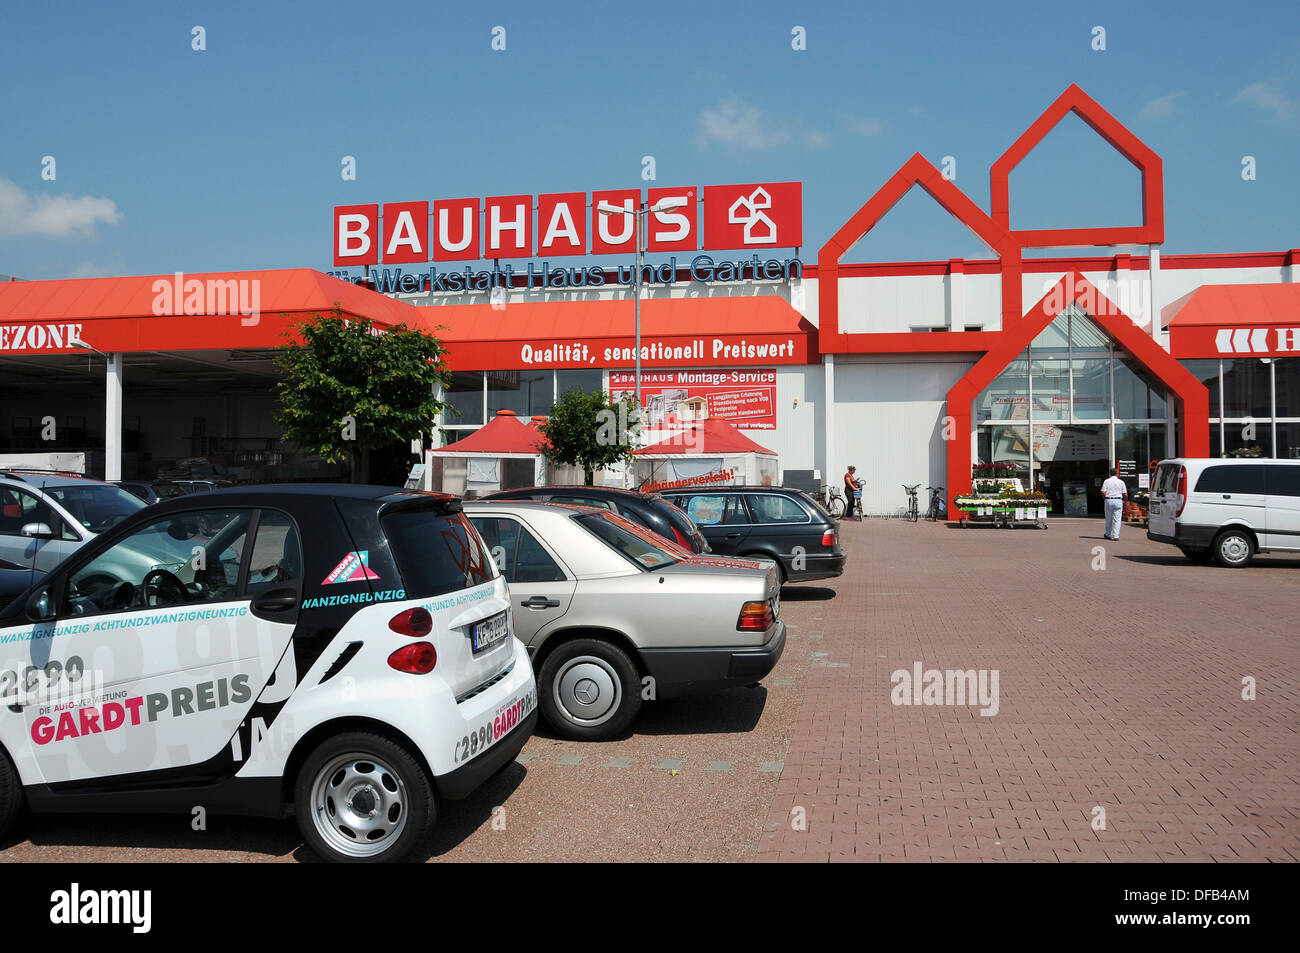 Bauhaus DIY store in Germany Stock Photo - Alamy